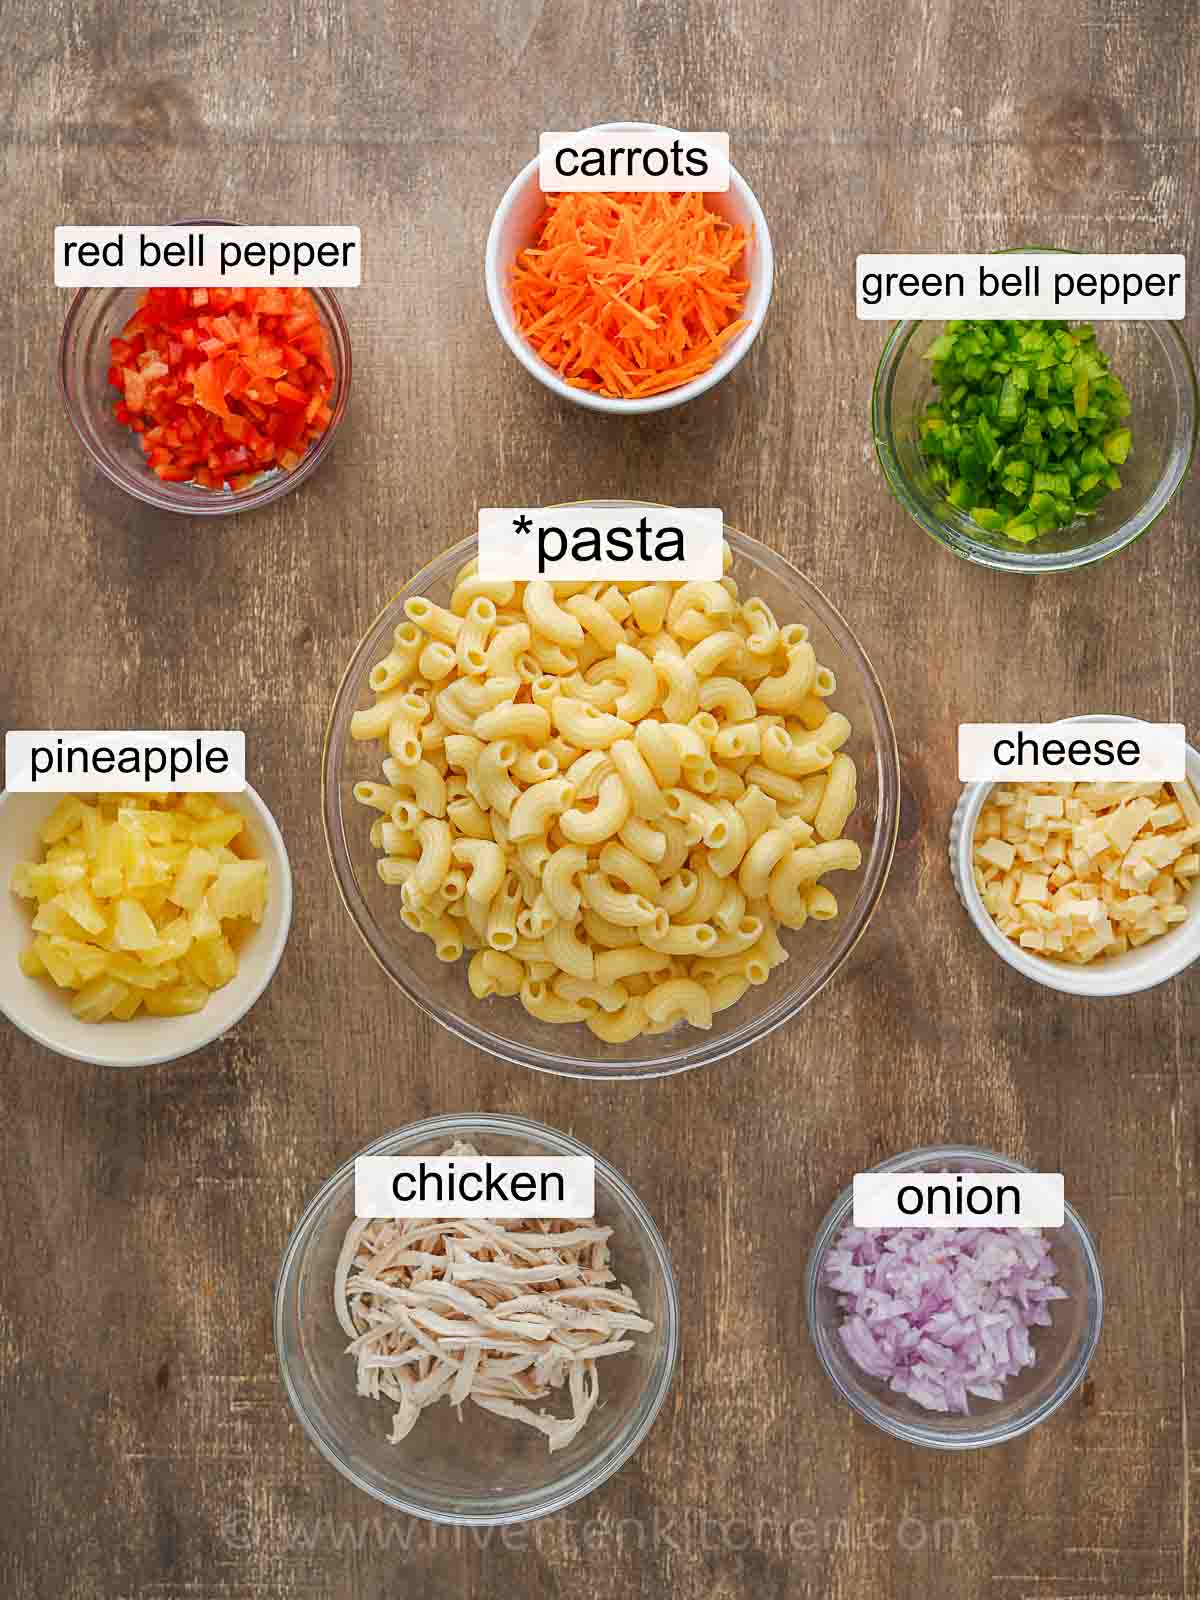 pasta, carrots, shredded chicken, onion, red bell pepper, green bell pepper, pineapple, cheese